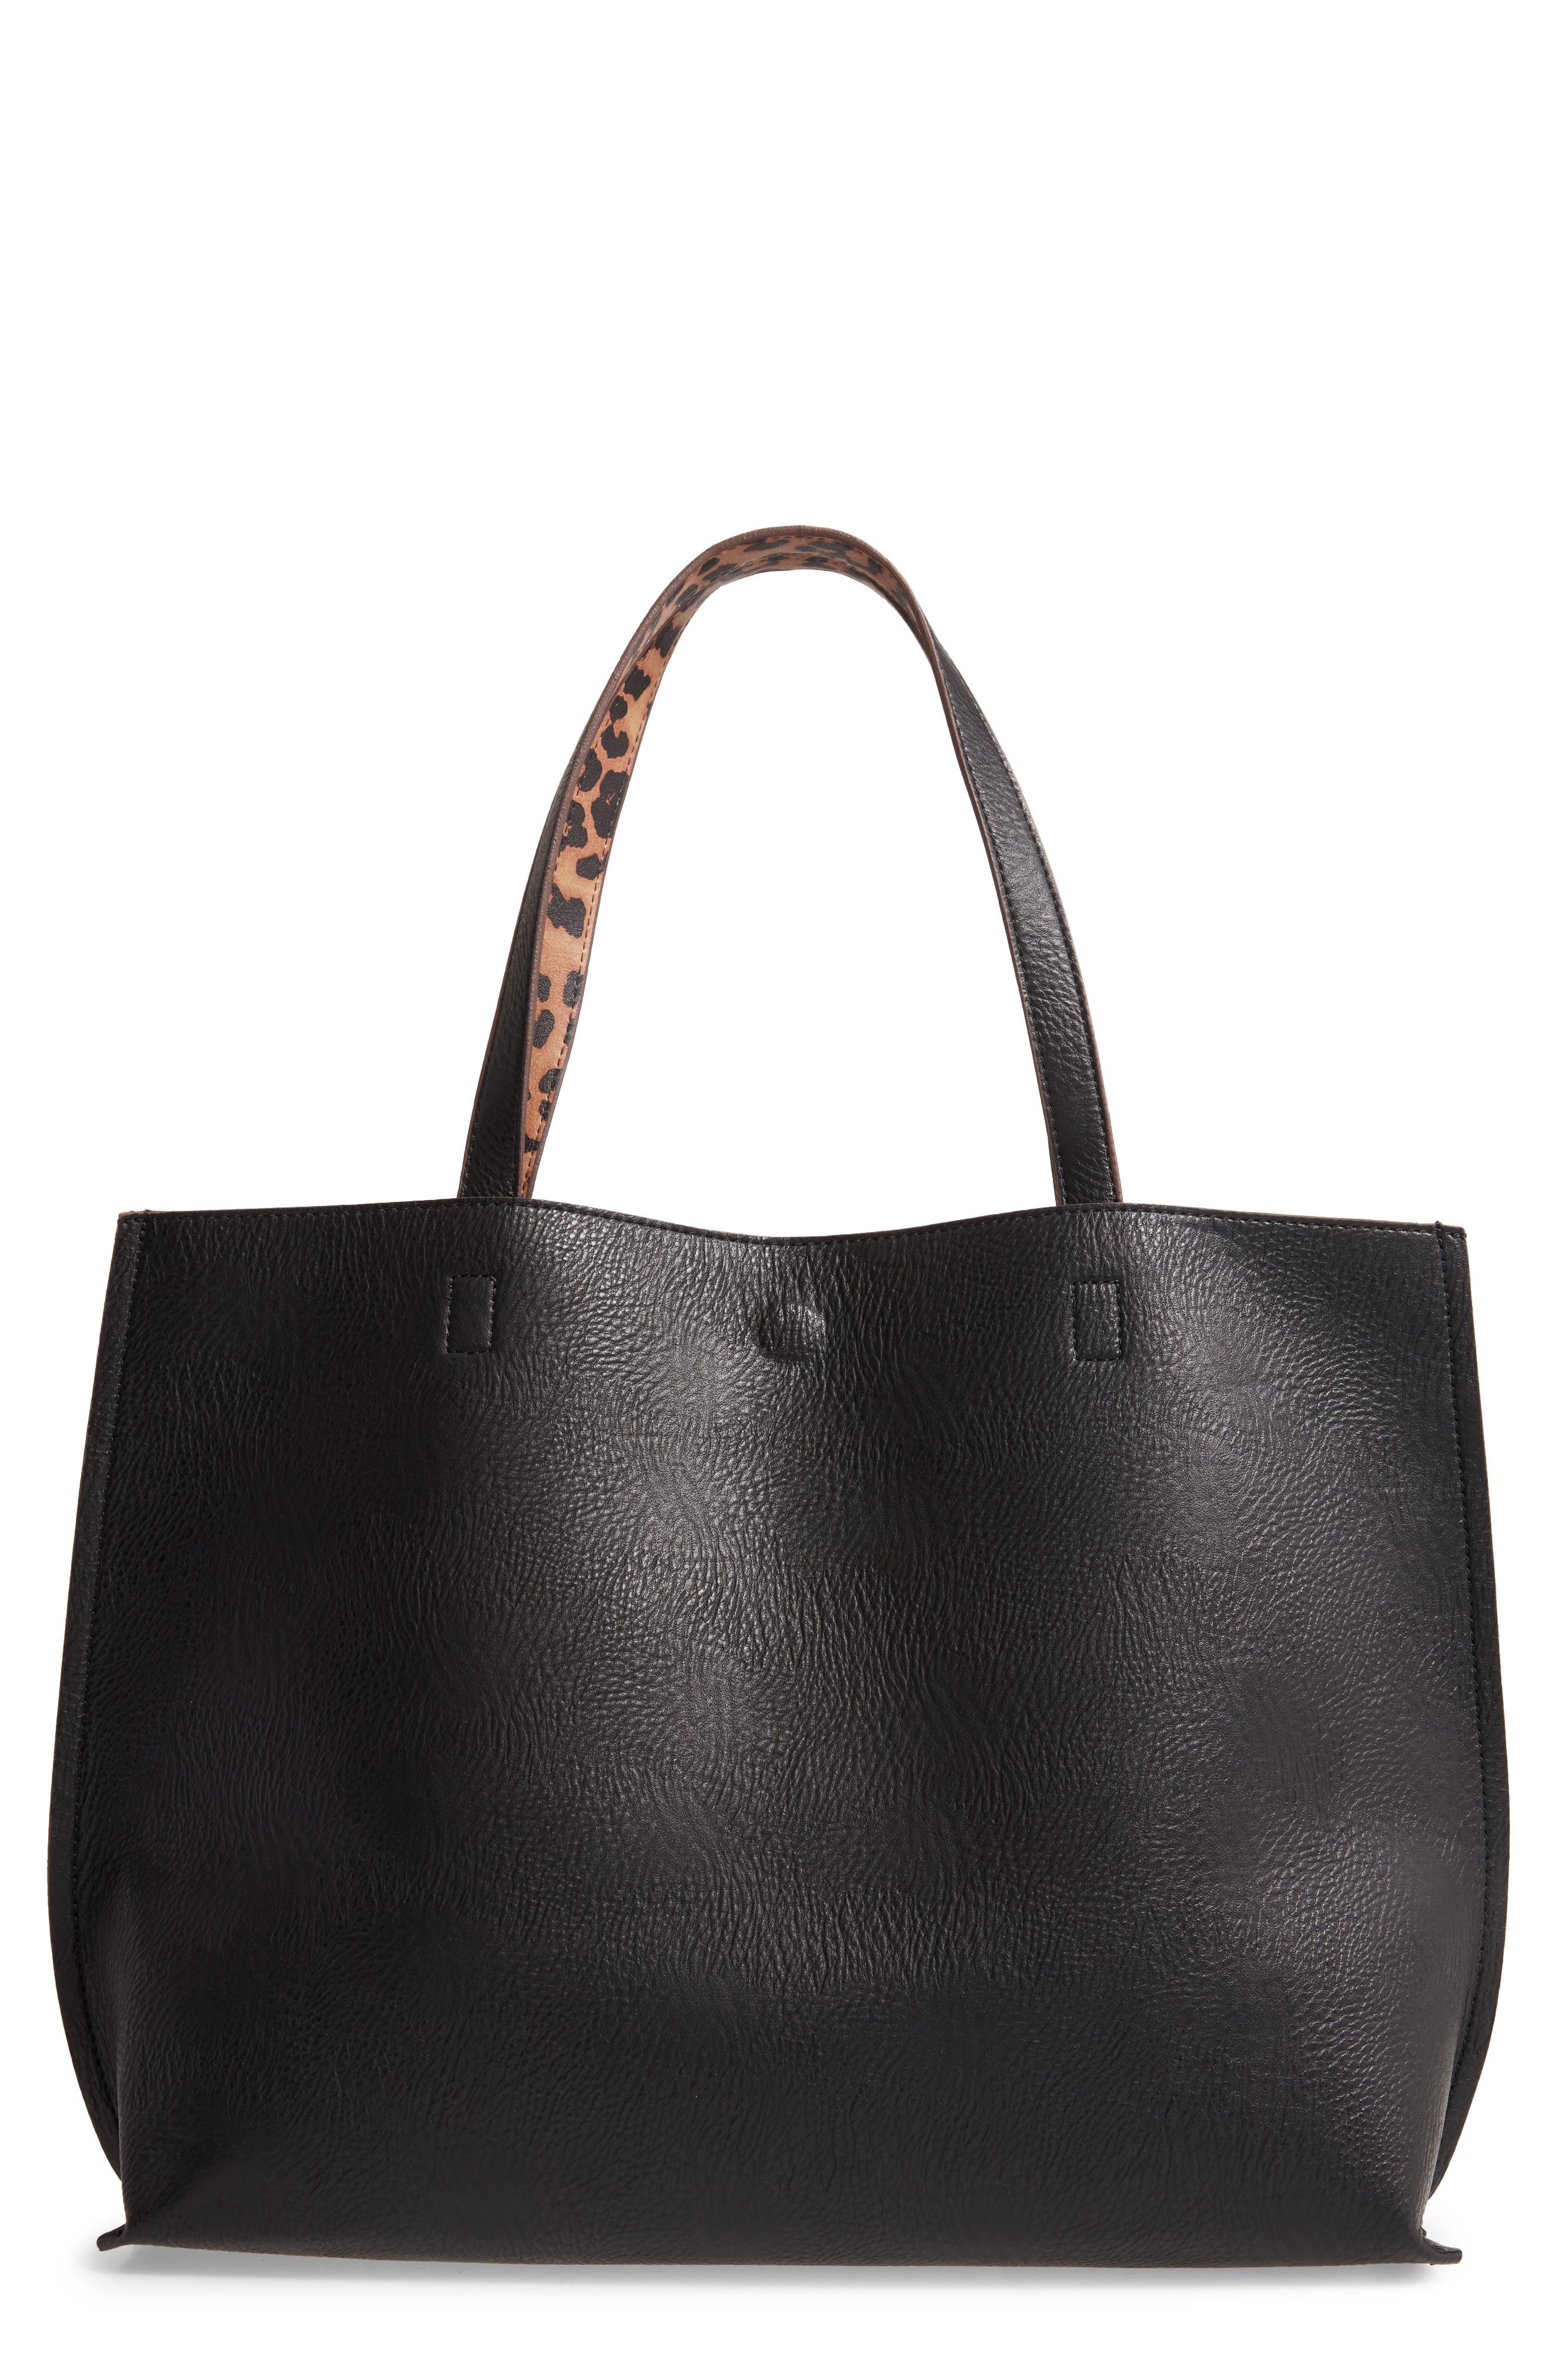 New Womens Handbags Faux Leather Tote Bag Satchel Shoulder Bag Purse Big Sale 